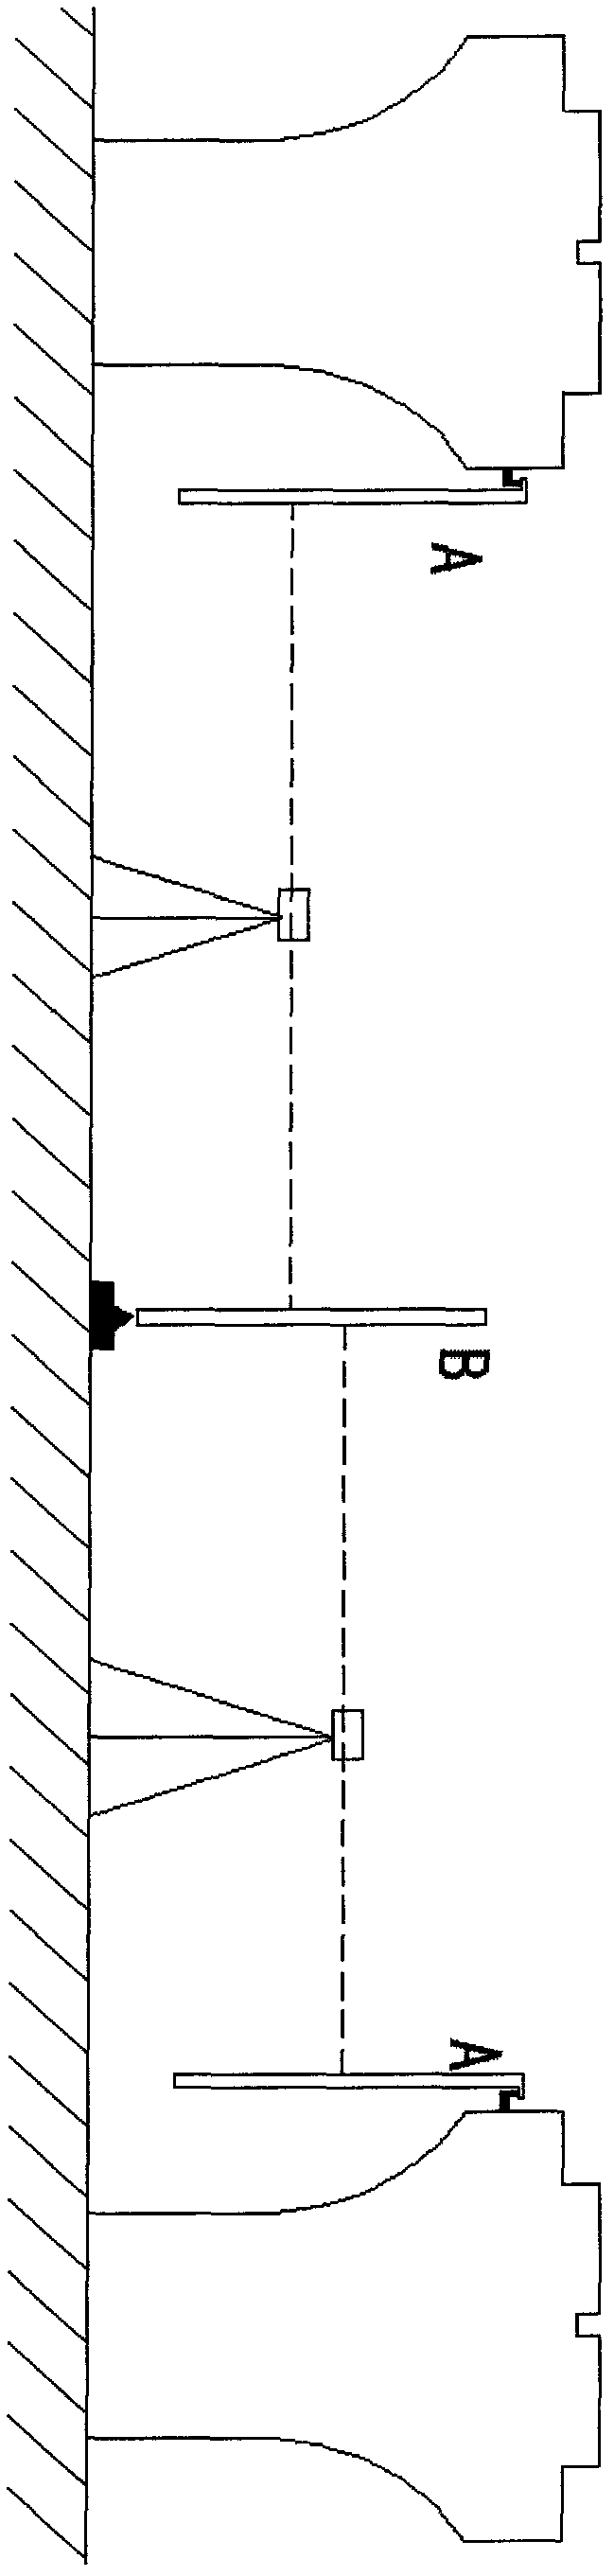 Suspended digital leveling rod and measuring method using same